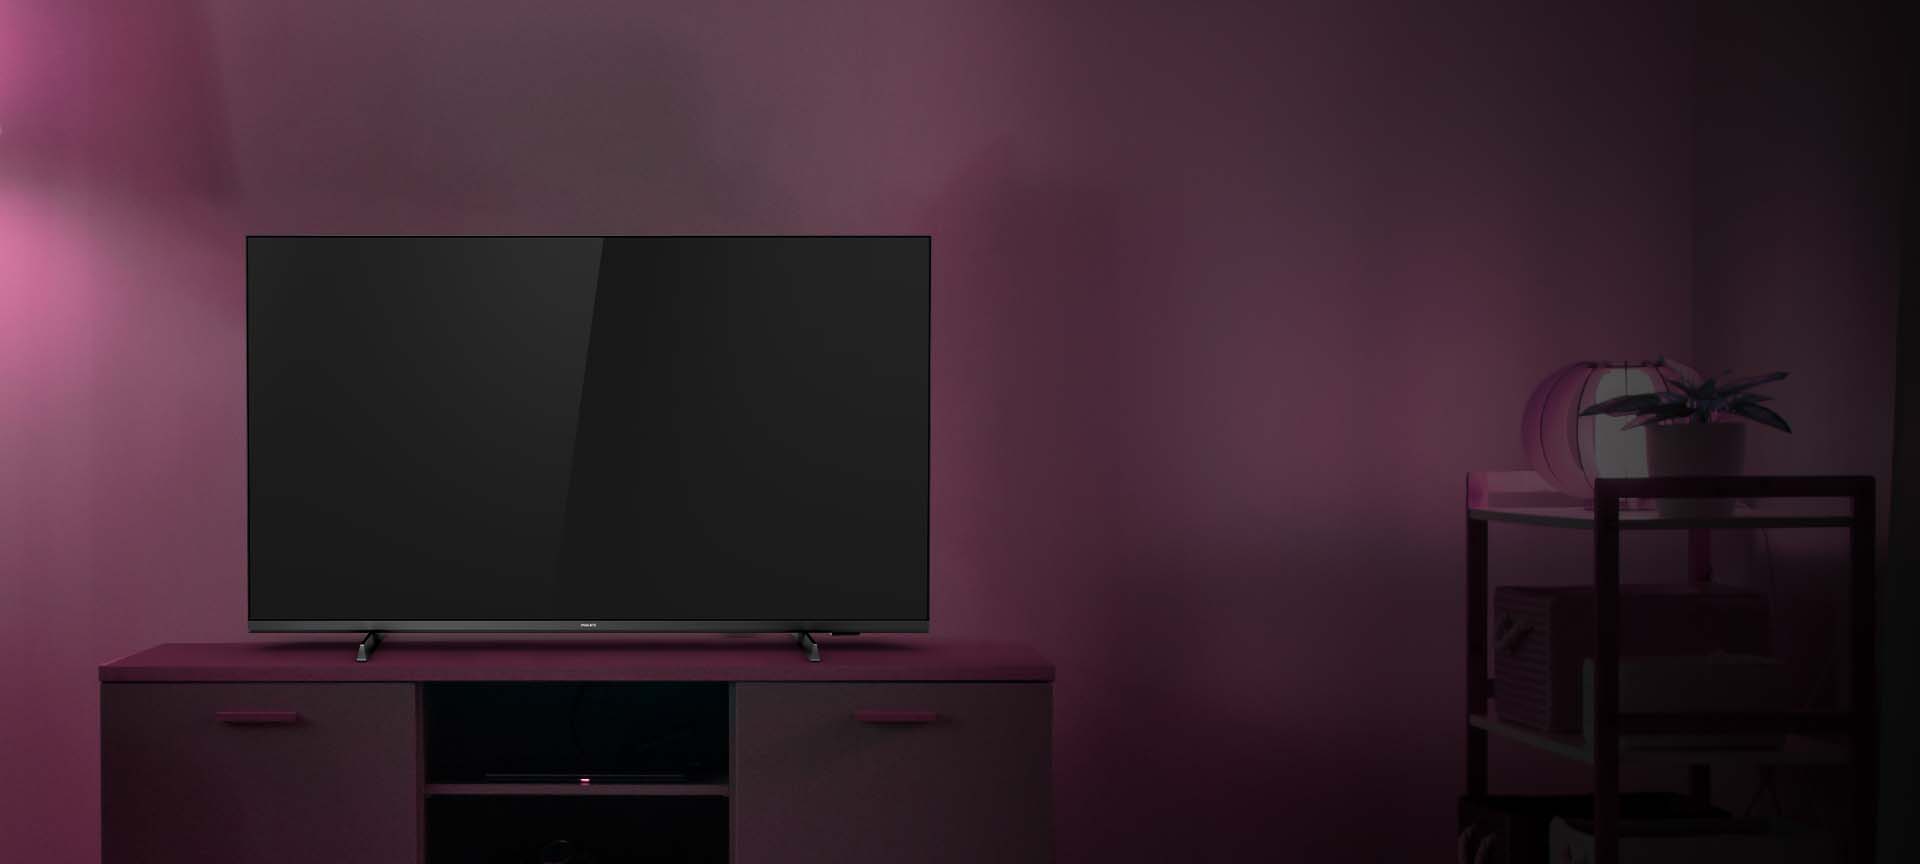 Smart TV 55” 4K UHD D-LED Philips 55PUG7406/78 - Android Wi-Fi Bluetooth  Google Assistente - TV 4K Ultra HD - Magazine Luiza